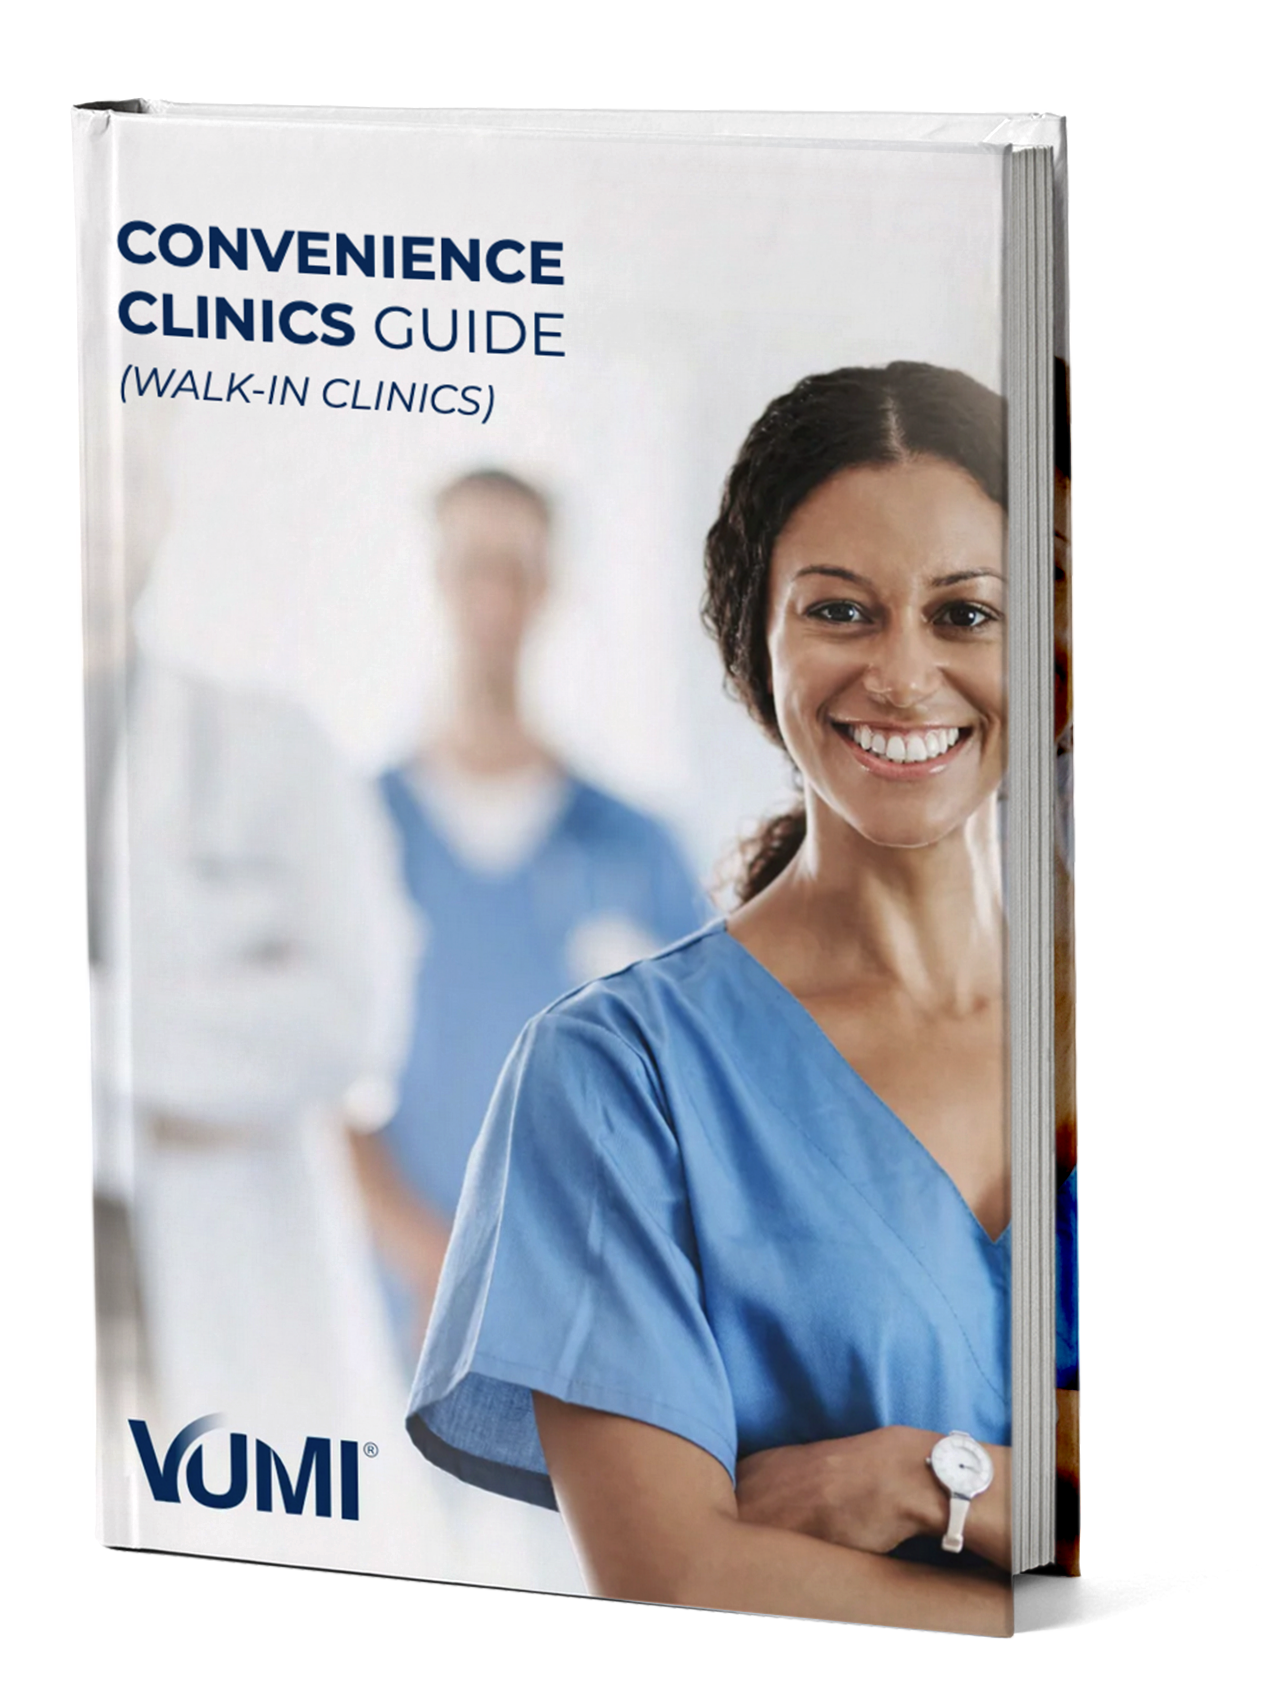 Convenience clinics guide